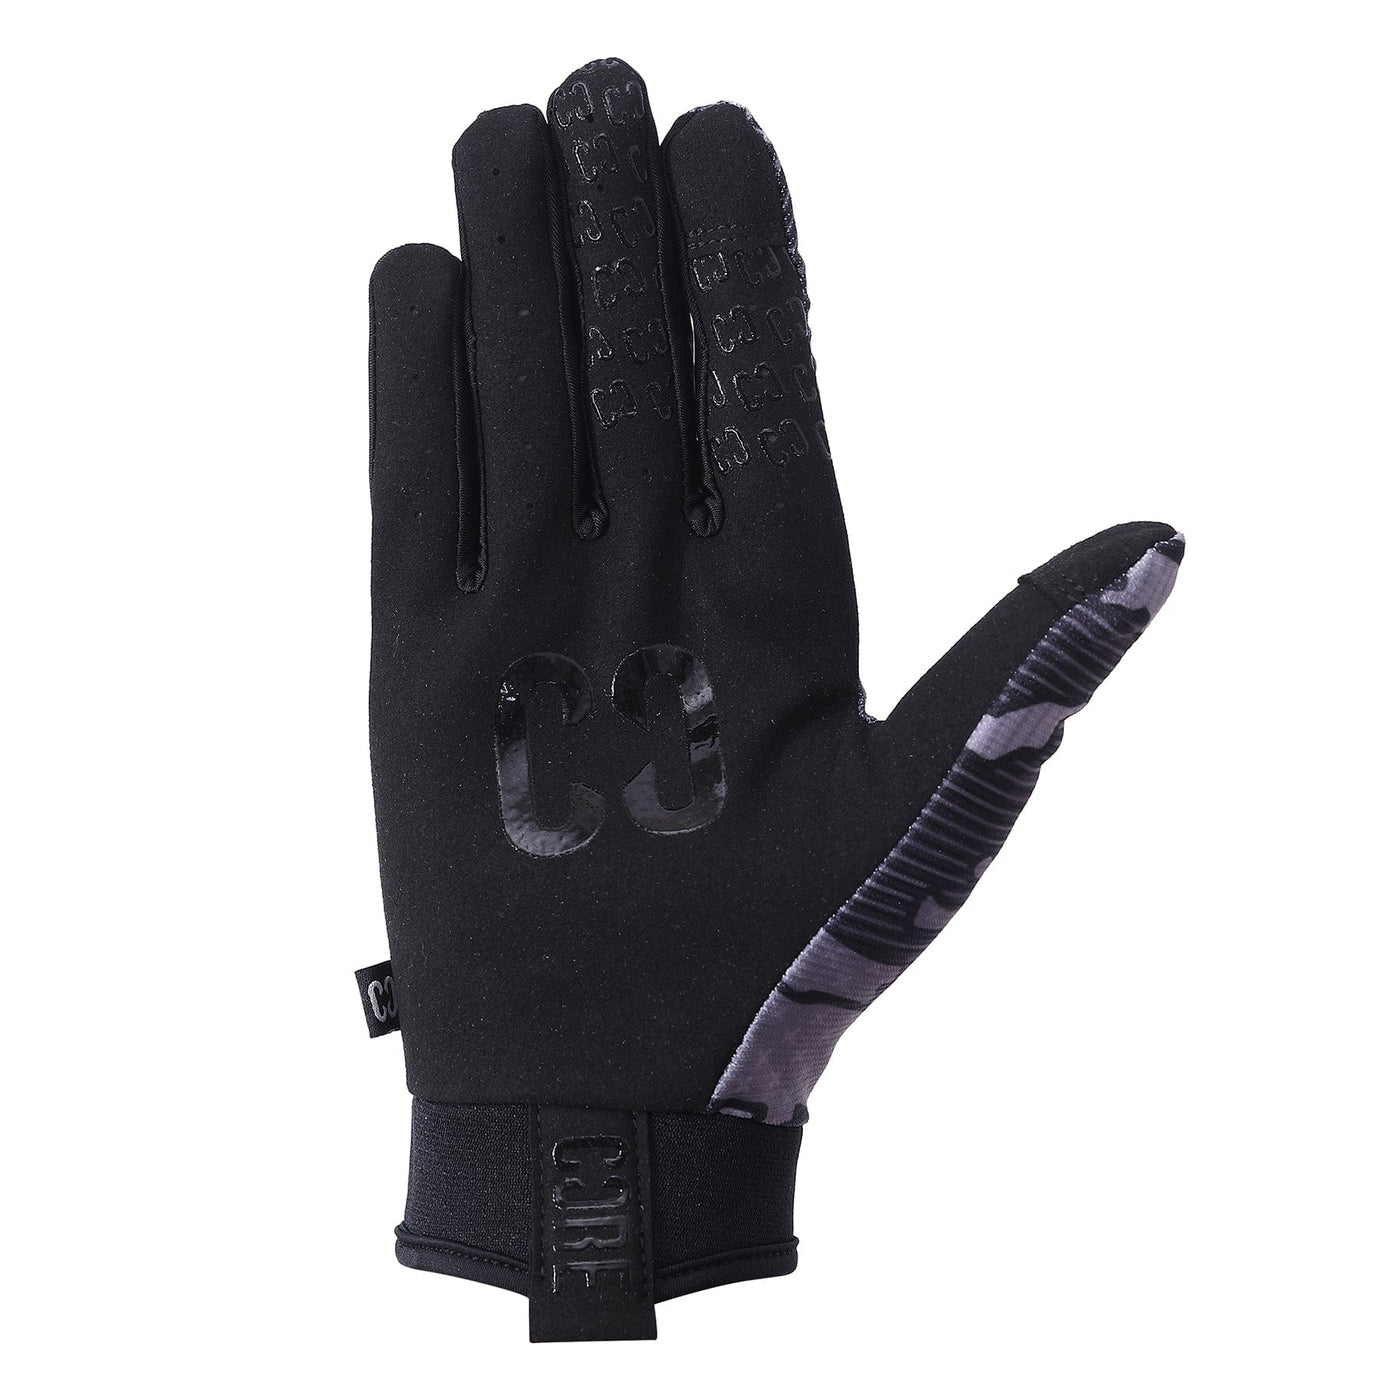 CORE Protection Aero Skateboard Gloves Black Camo I Skateboarding Gloves Palm